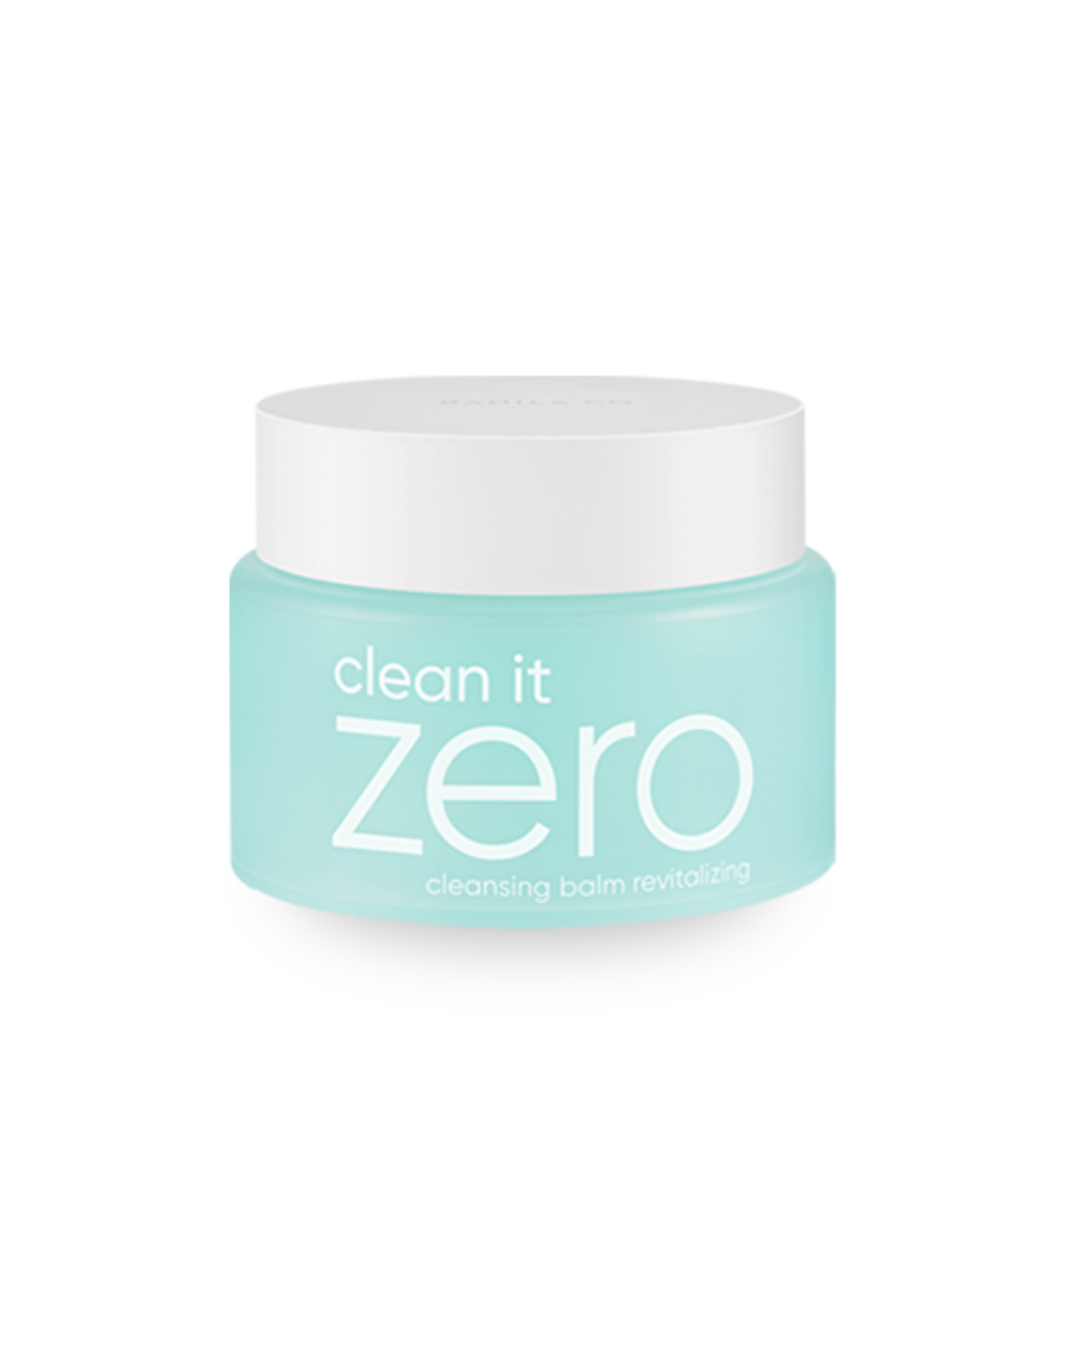 Banila Co Clean It Zero Cleansing Balm | Revitalizing